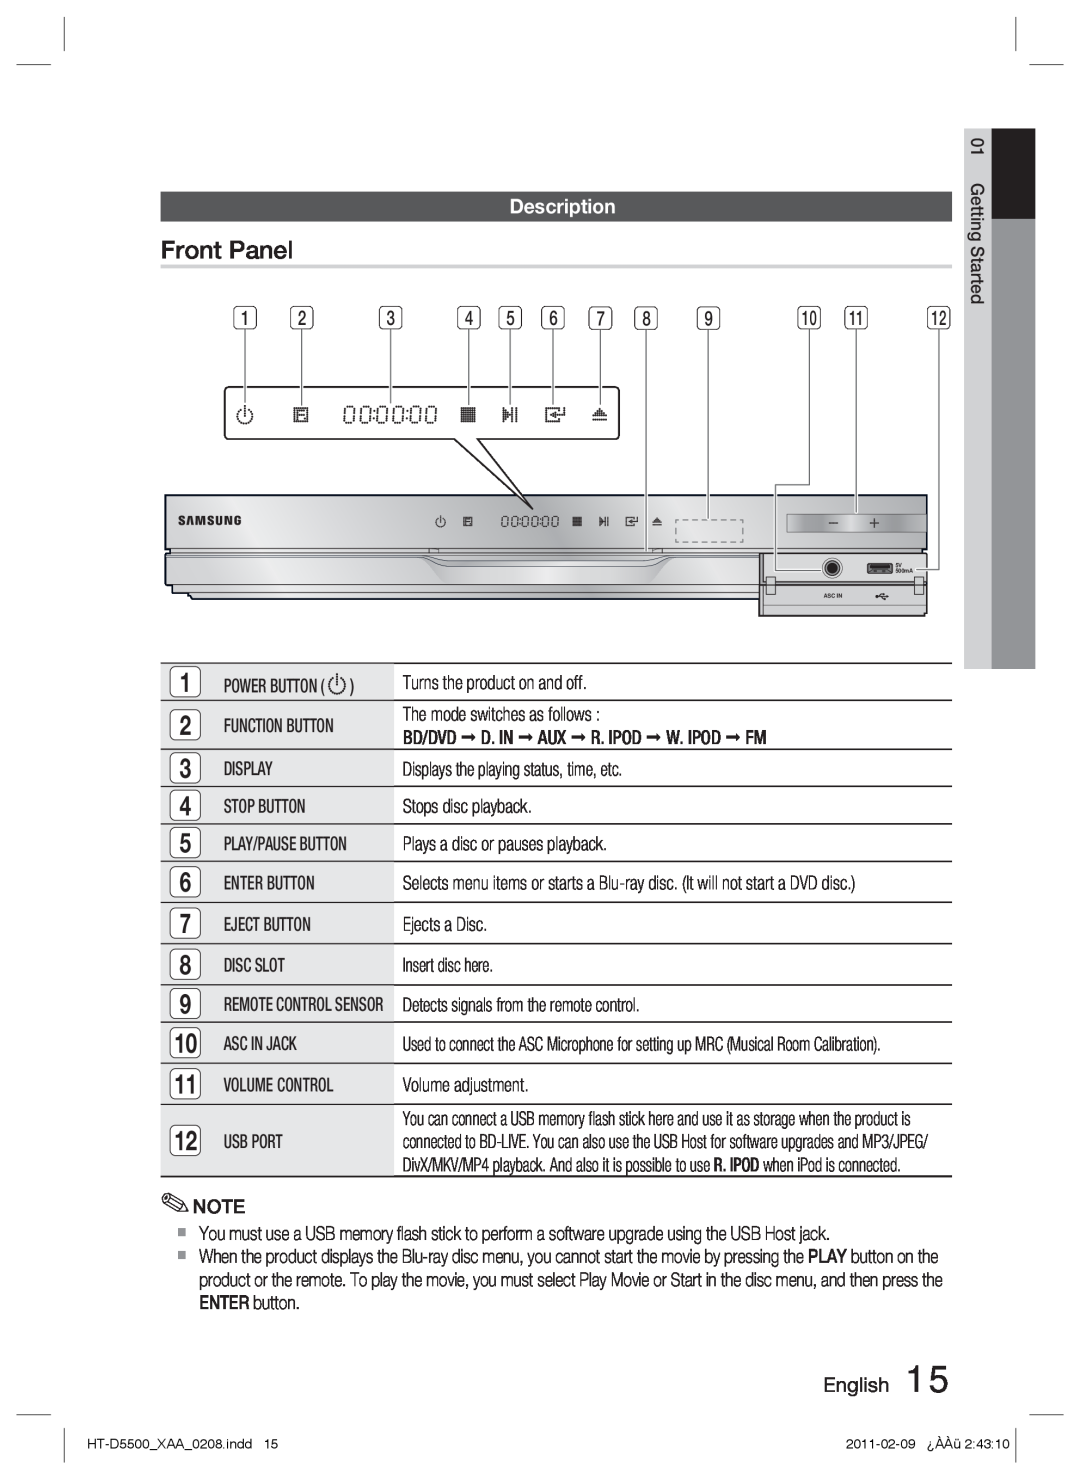 Samsung D5500 user manual Front Panel, Description 